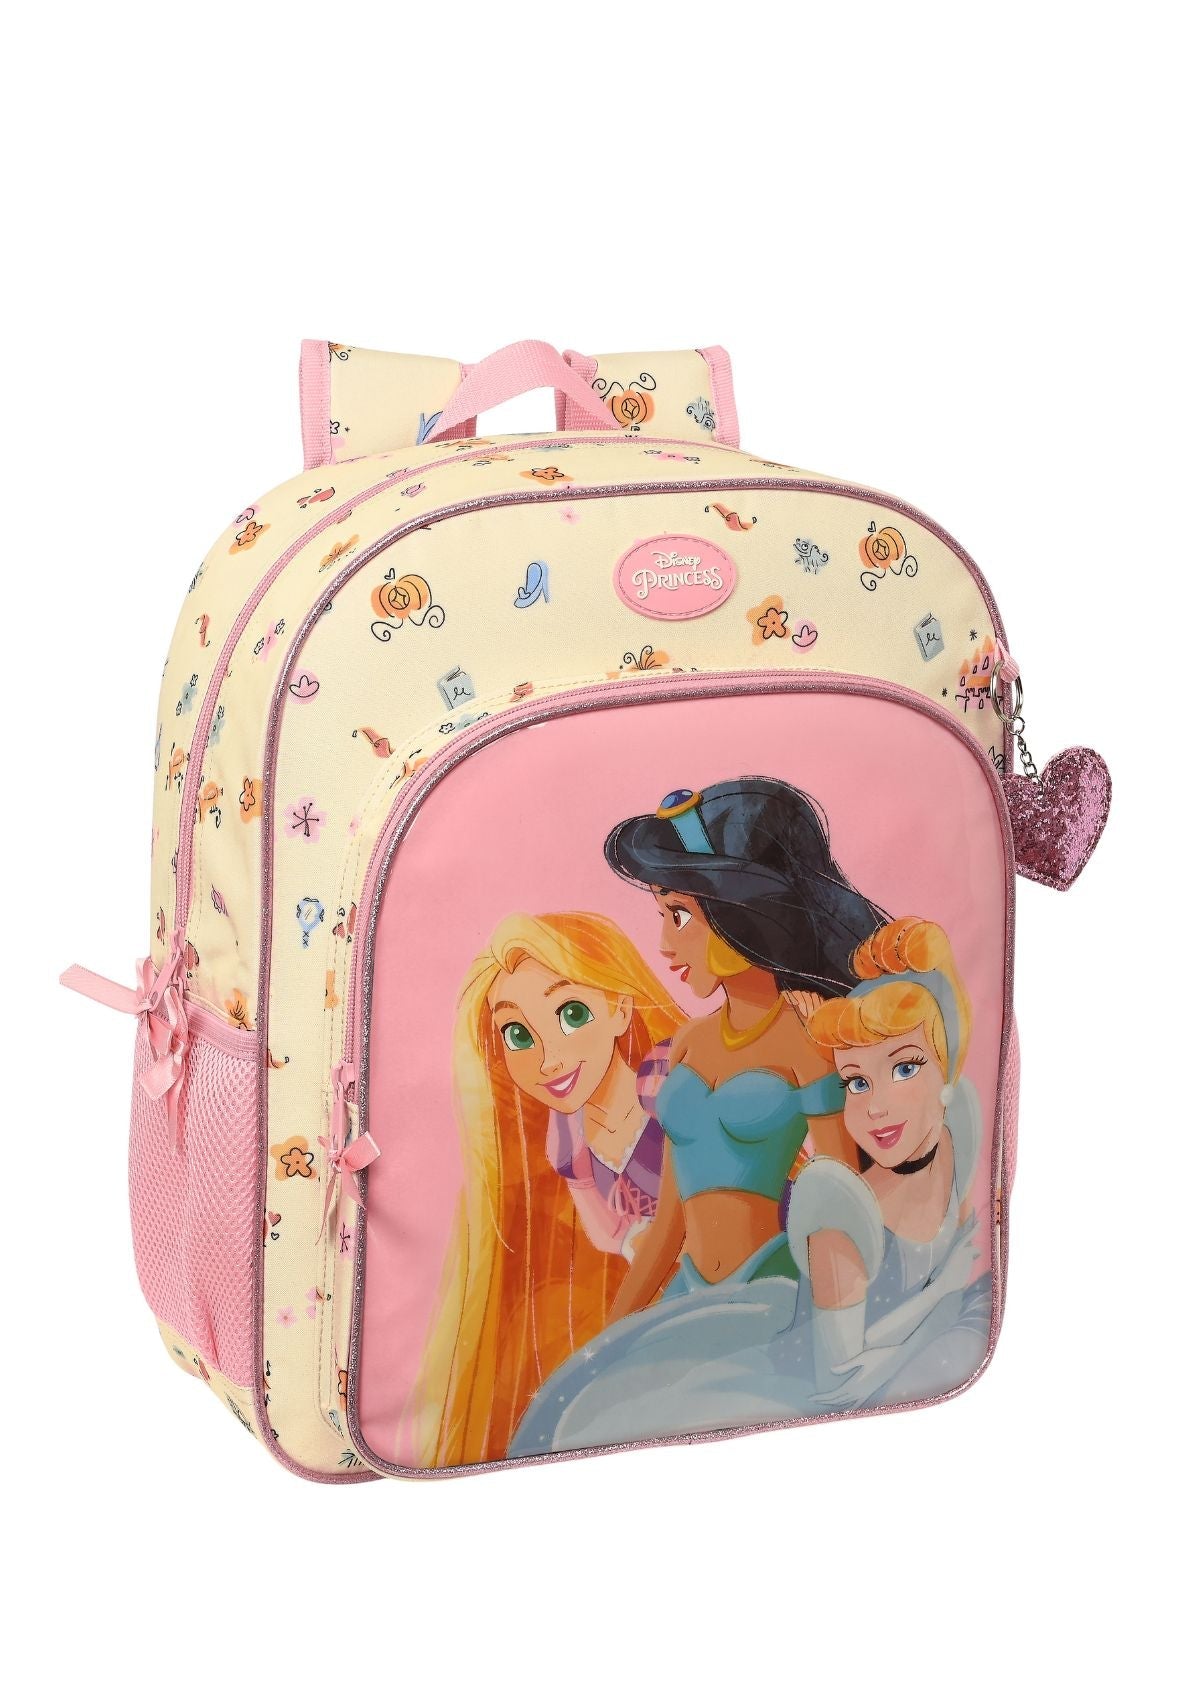 Safta Junior Backpack Disney Princess front